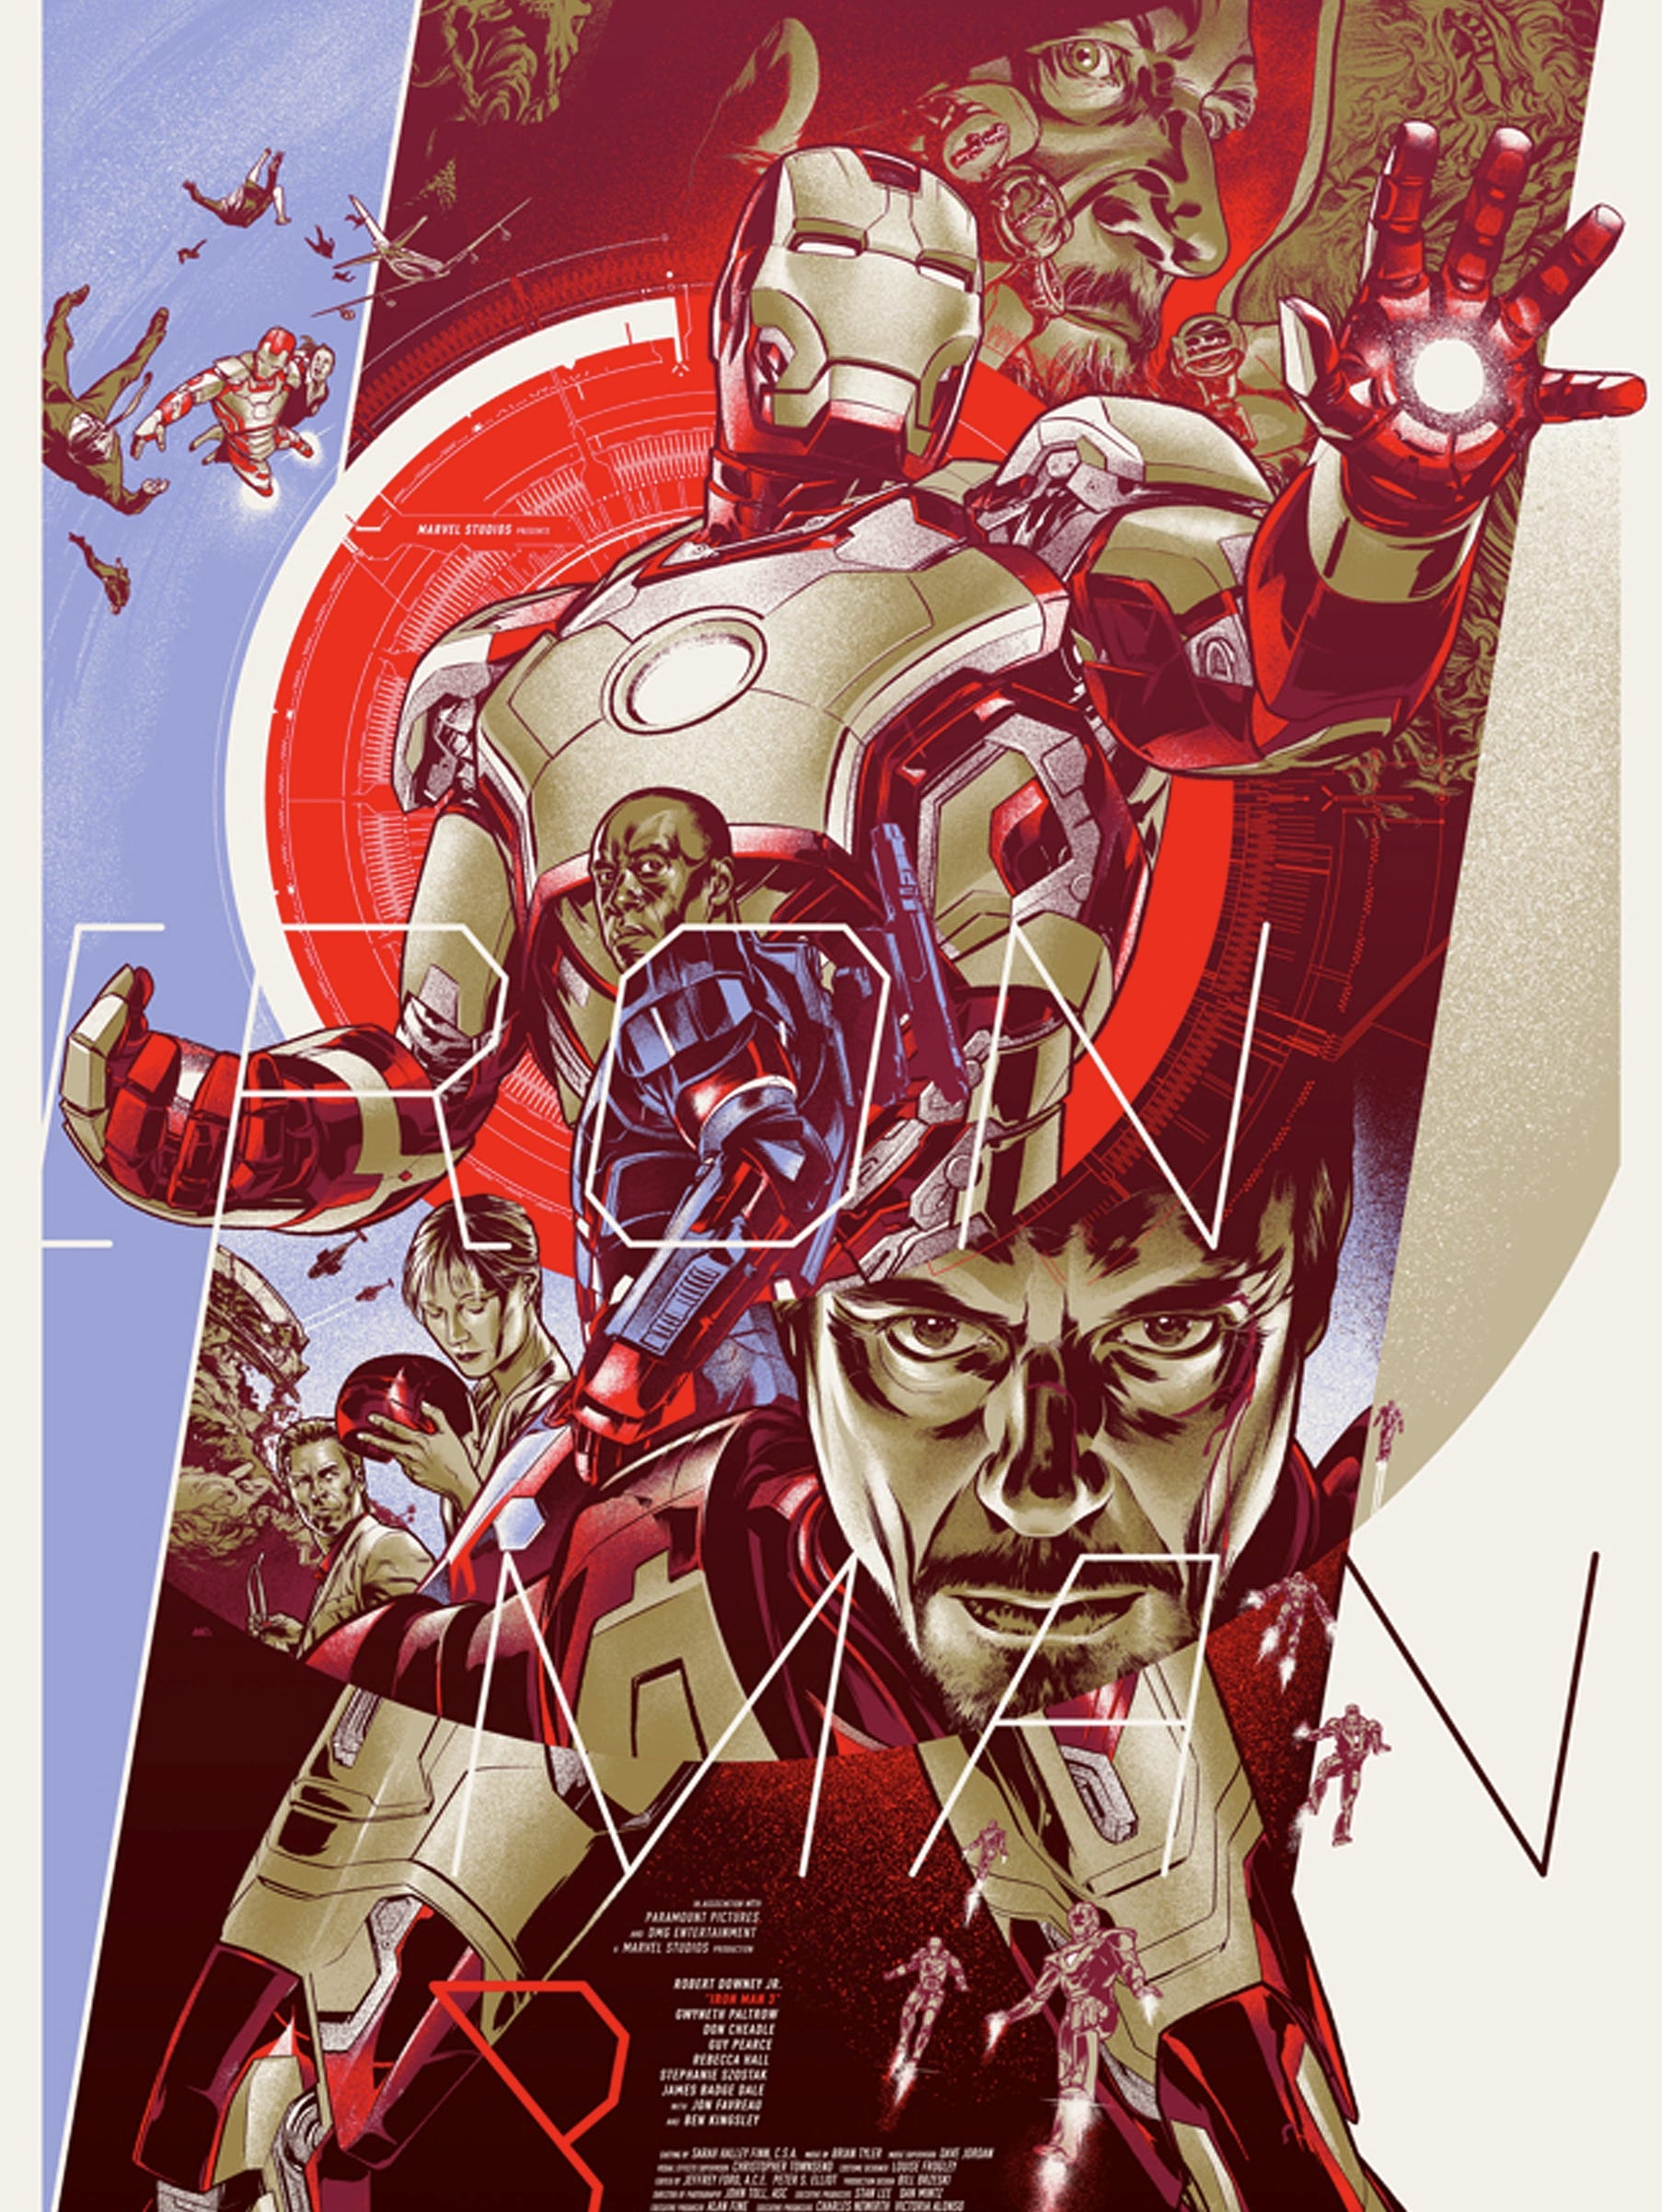 US Imported Movie Wall Poster Print Robert Downey Jr IRON MAN 3 30CM X 43CM Brand New 